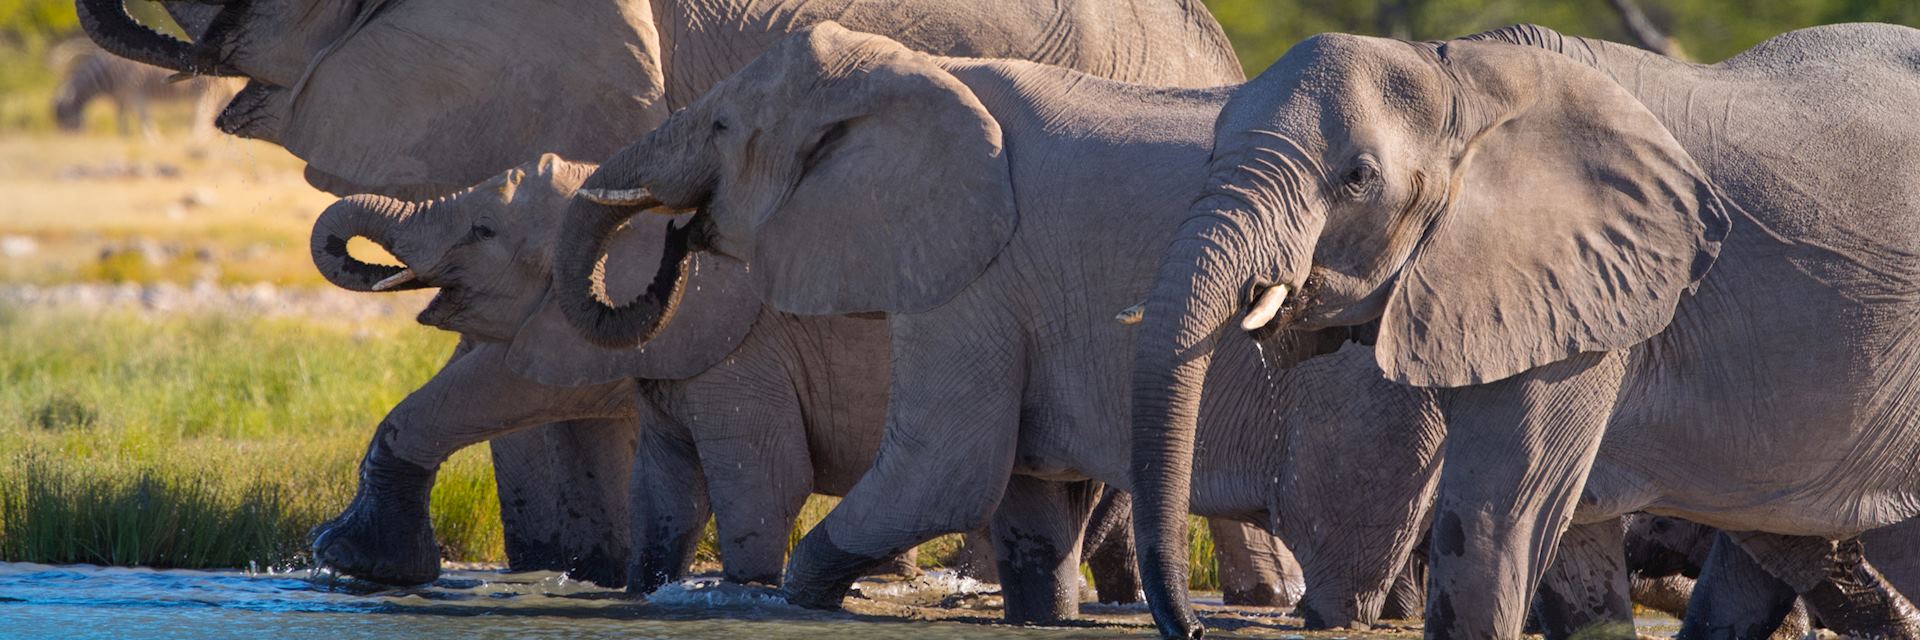 Elephants in Nkasa Lupala National Park